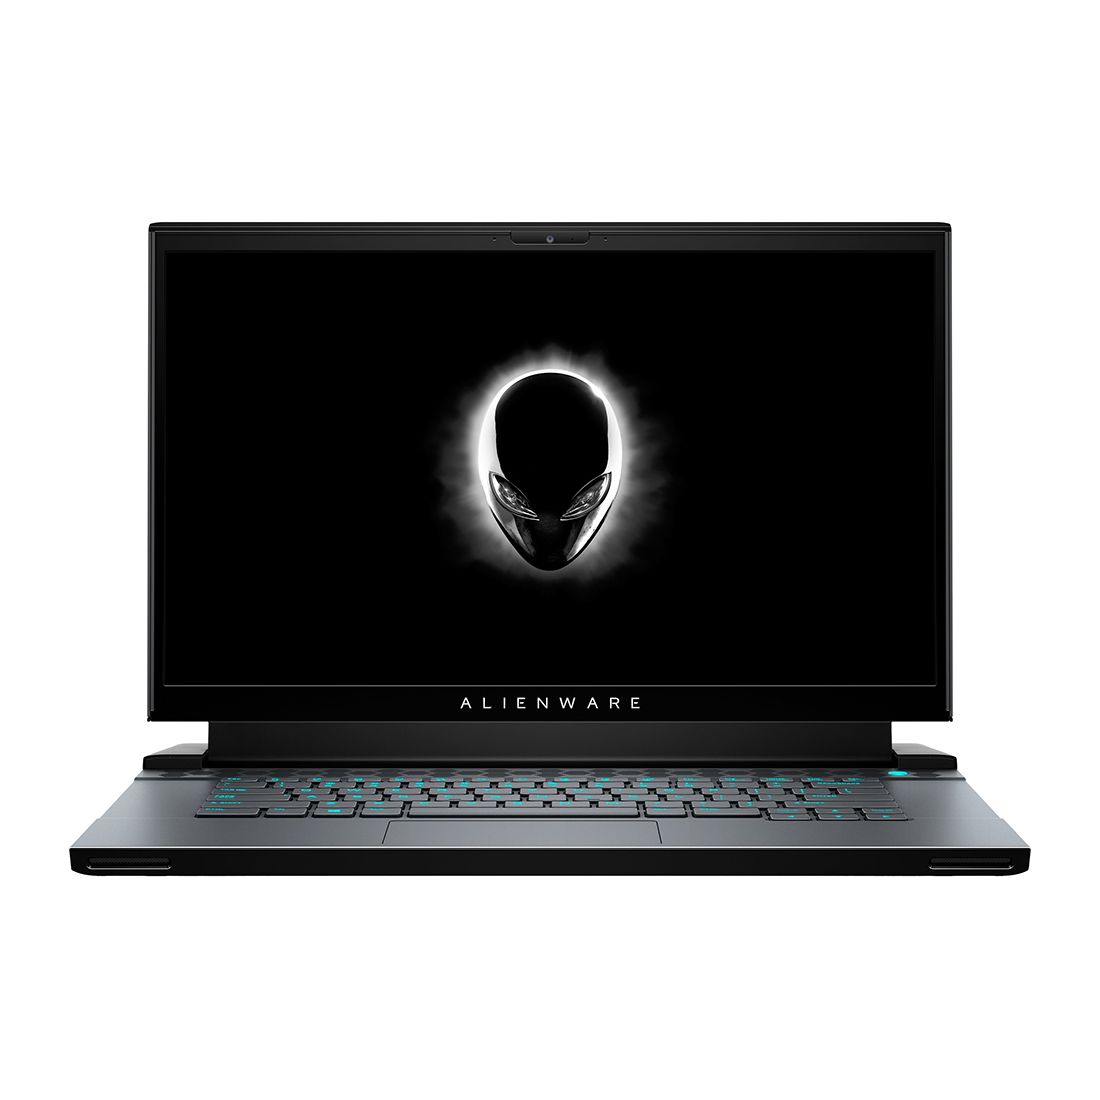 Alienware M15 R3 Gaming Laptop I9-10980Hk/32GB/1TB SSD/NVIDIA GeForce RTX 2080 Super 8GB/15.6 FHD/300Hz/Windows 10/Black